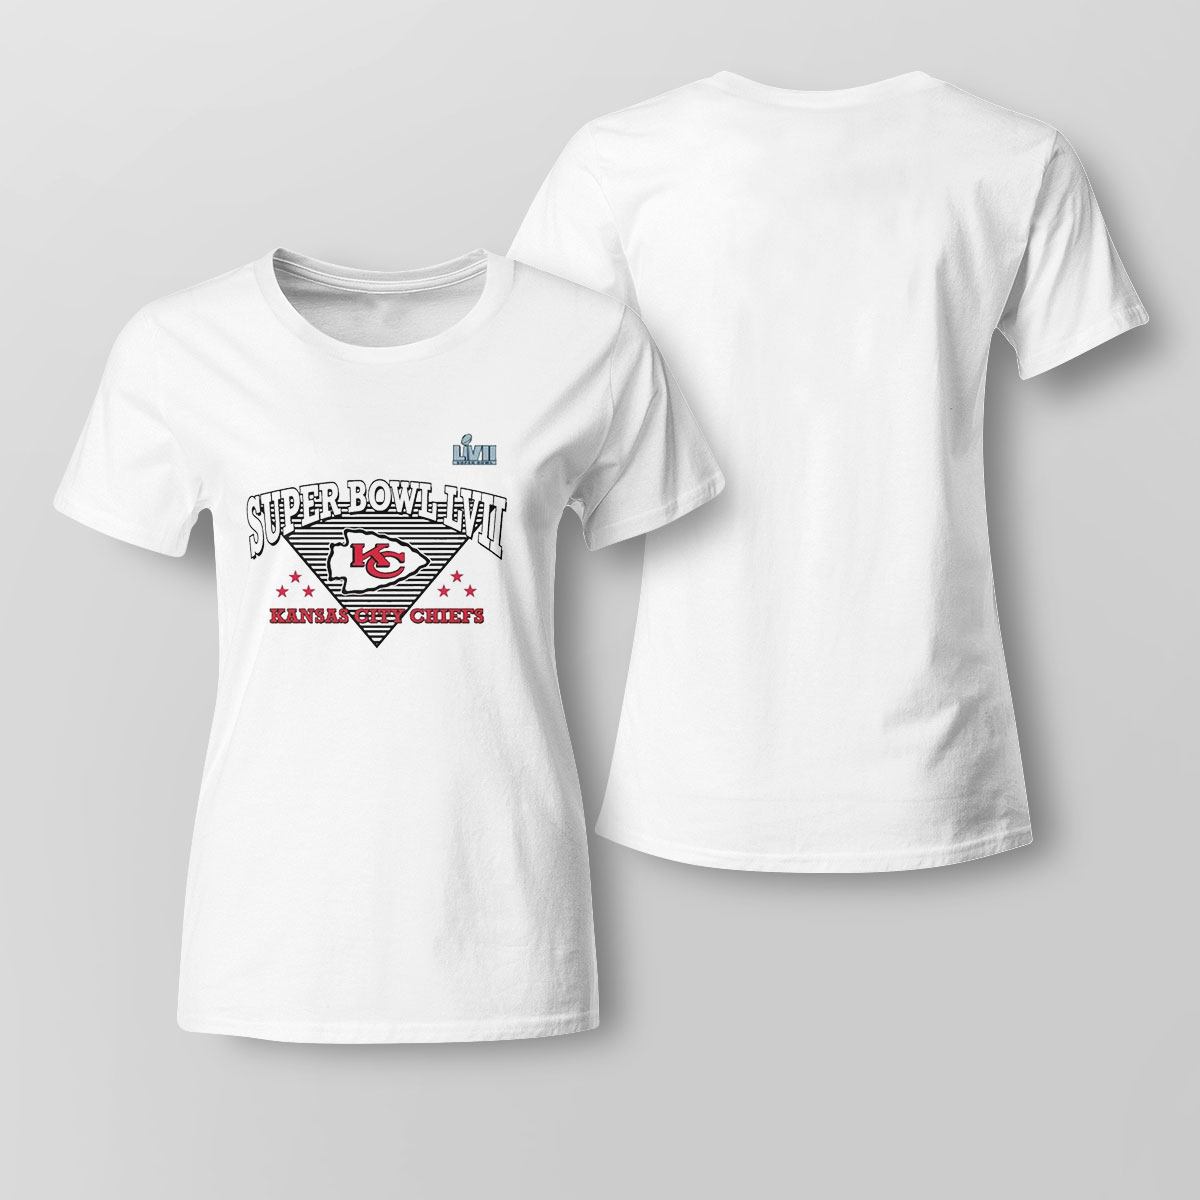 Kansas City Chiefs Football Super Bowl Lvii Triangle Strategy Shrit T Shirt Shirt Ladies Tee